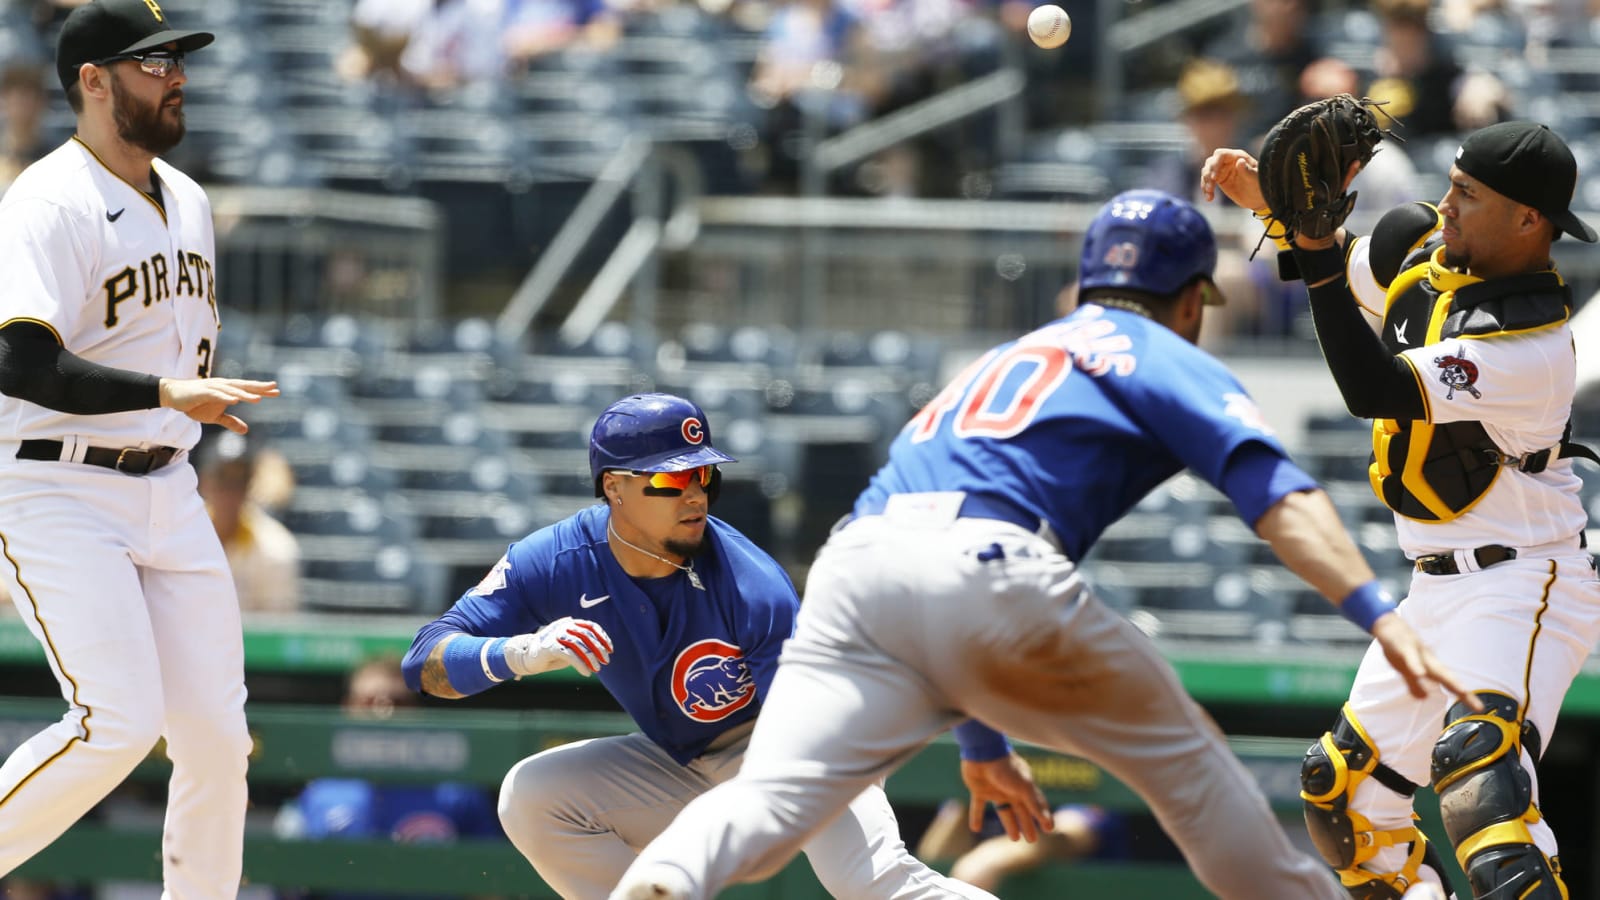 Javy Baez steals run for Cubs on hilarious rundown play